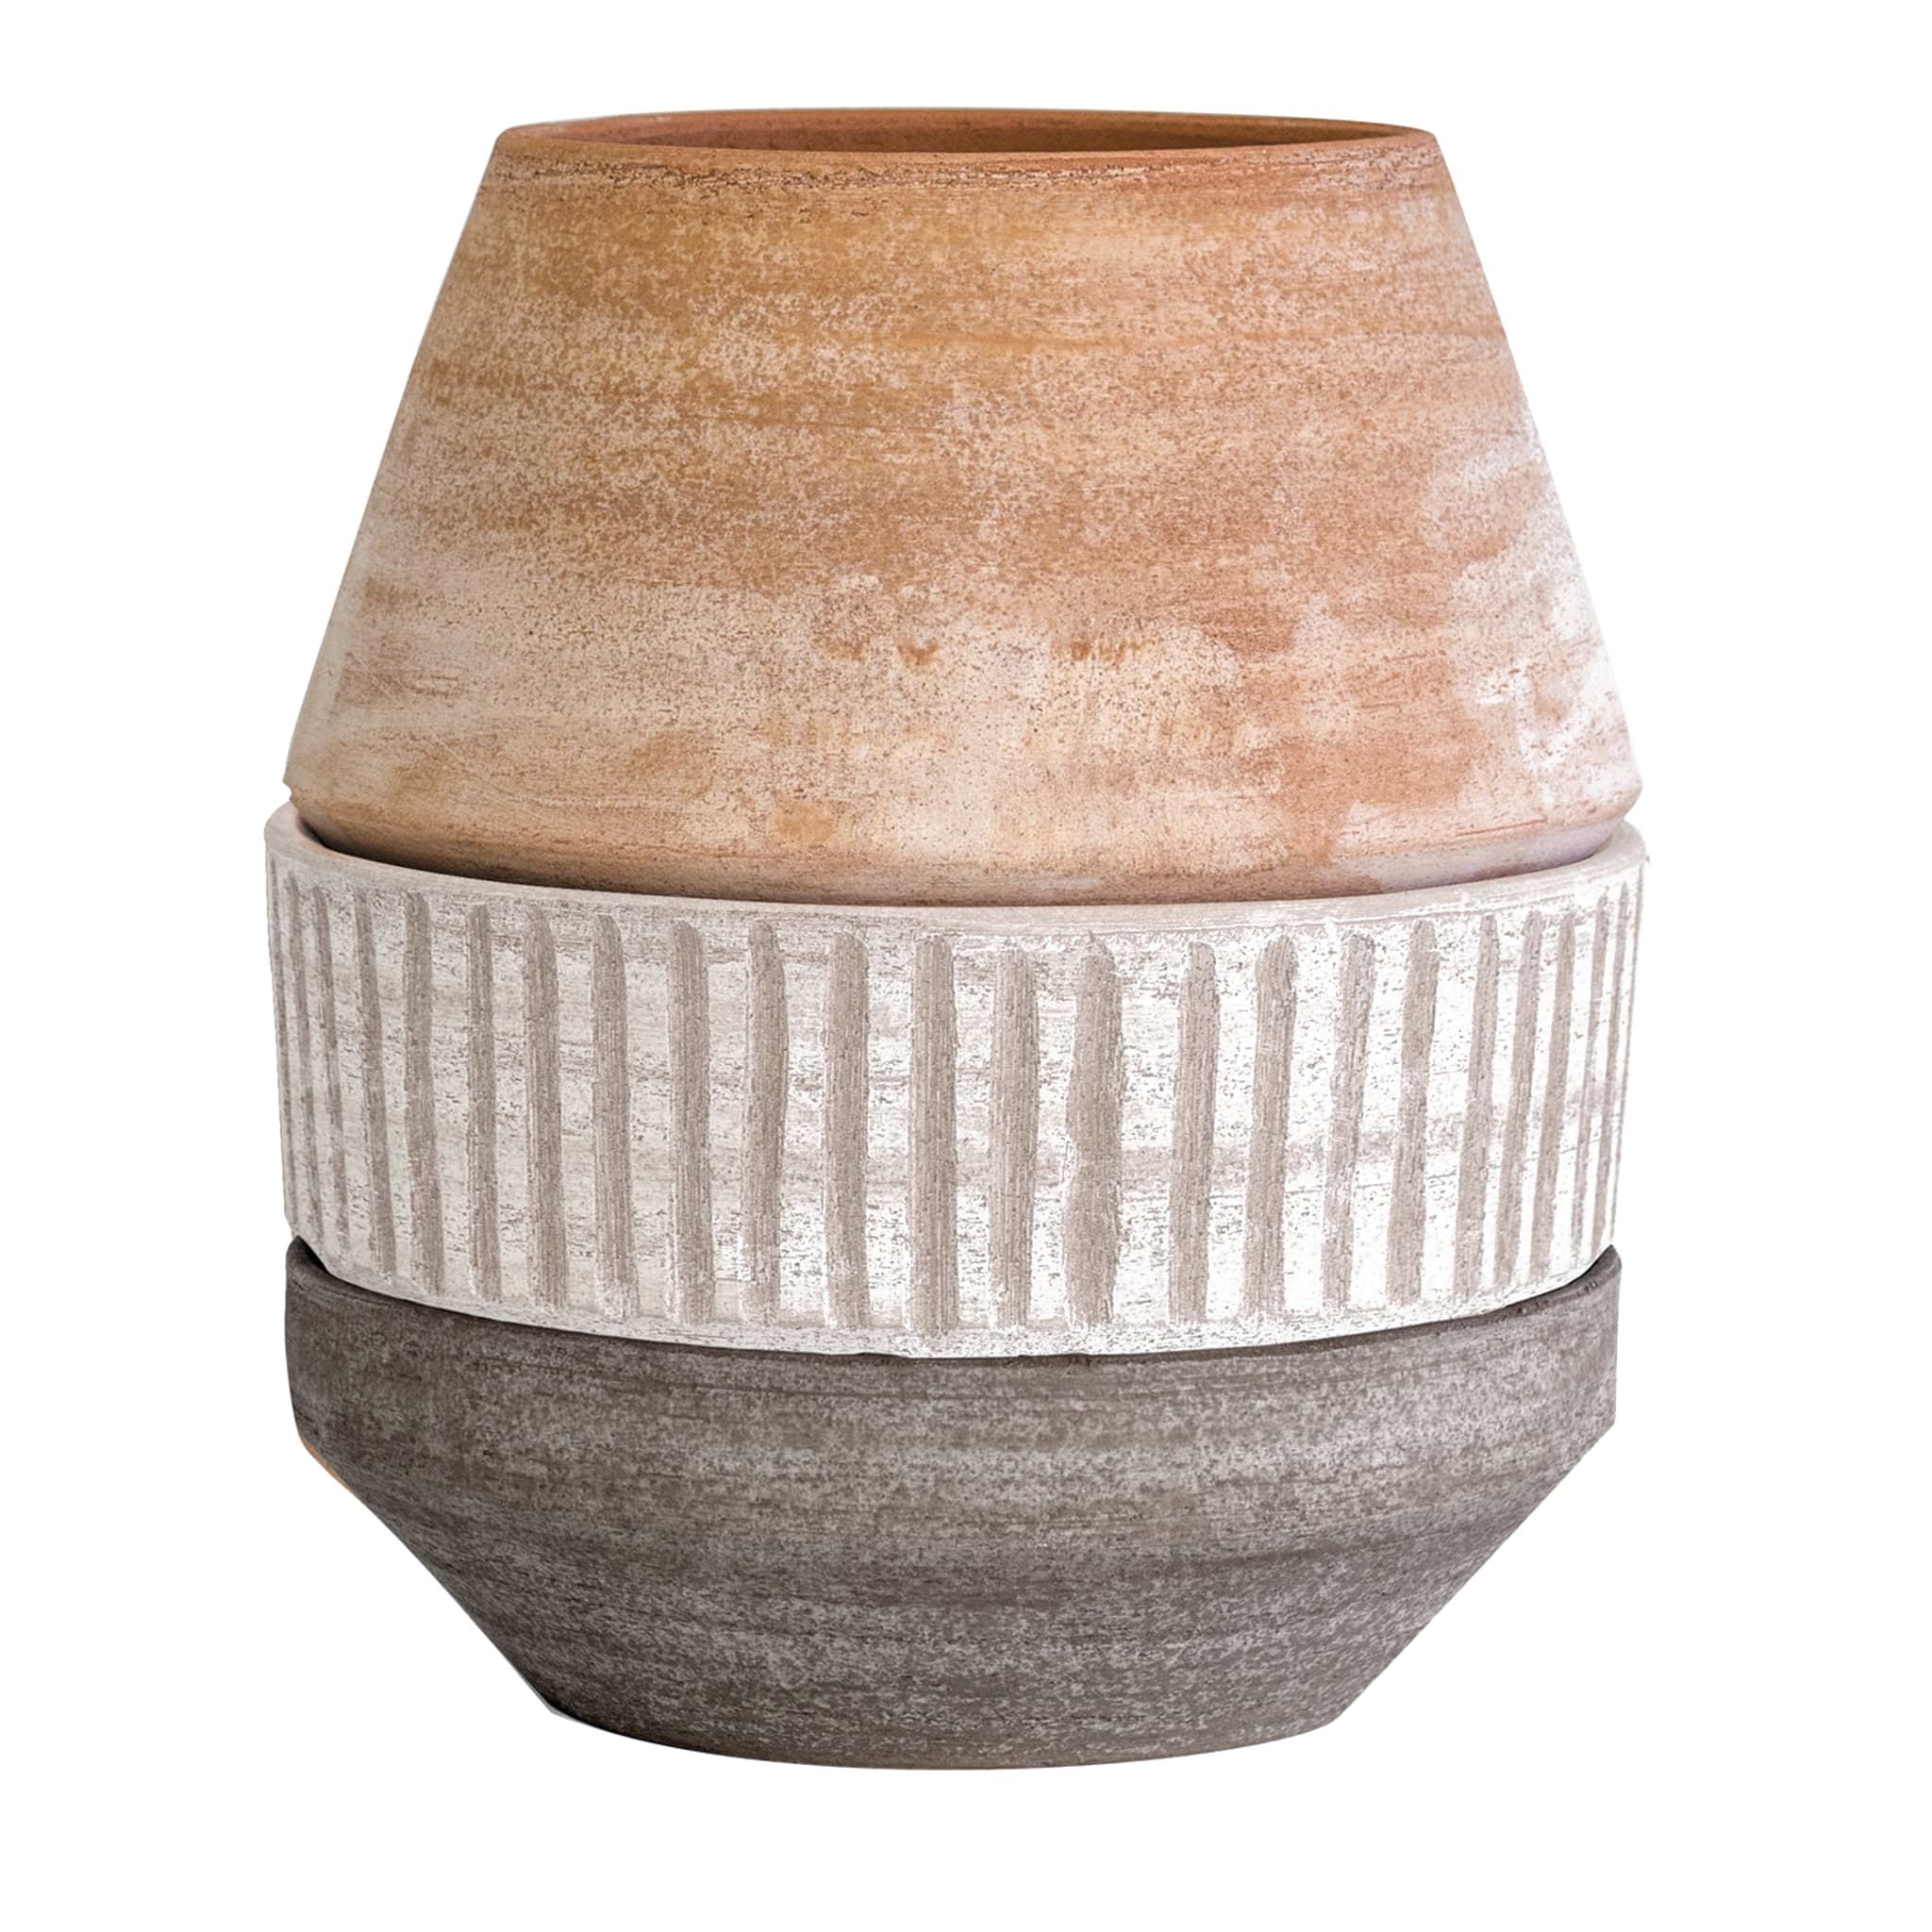 Cachepots & Vase Holders thumbnail